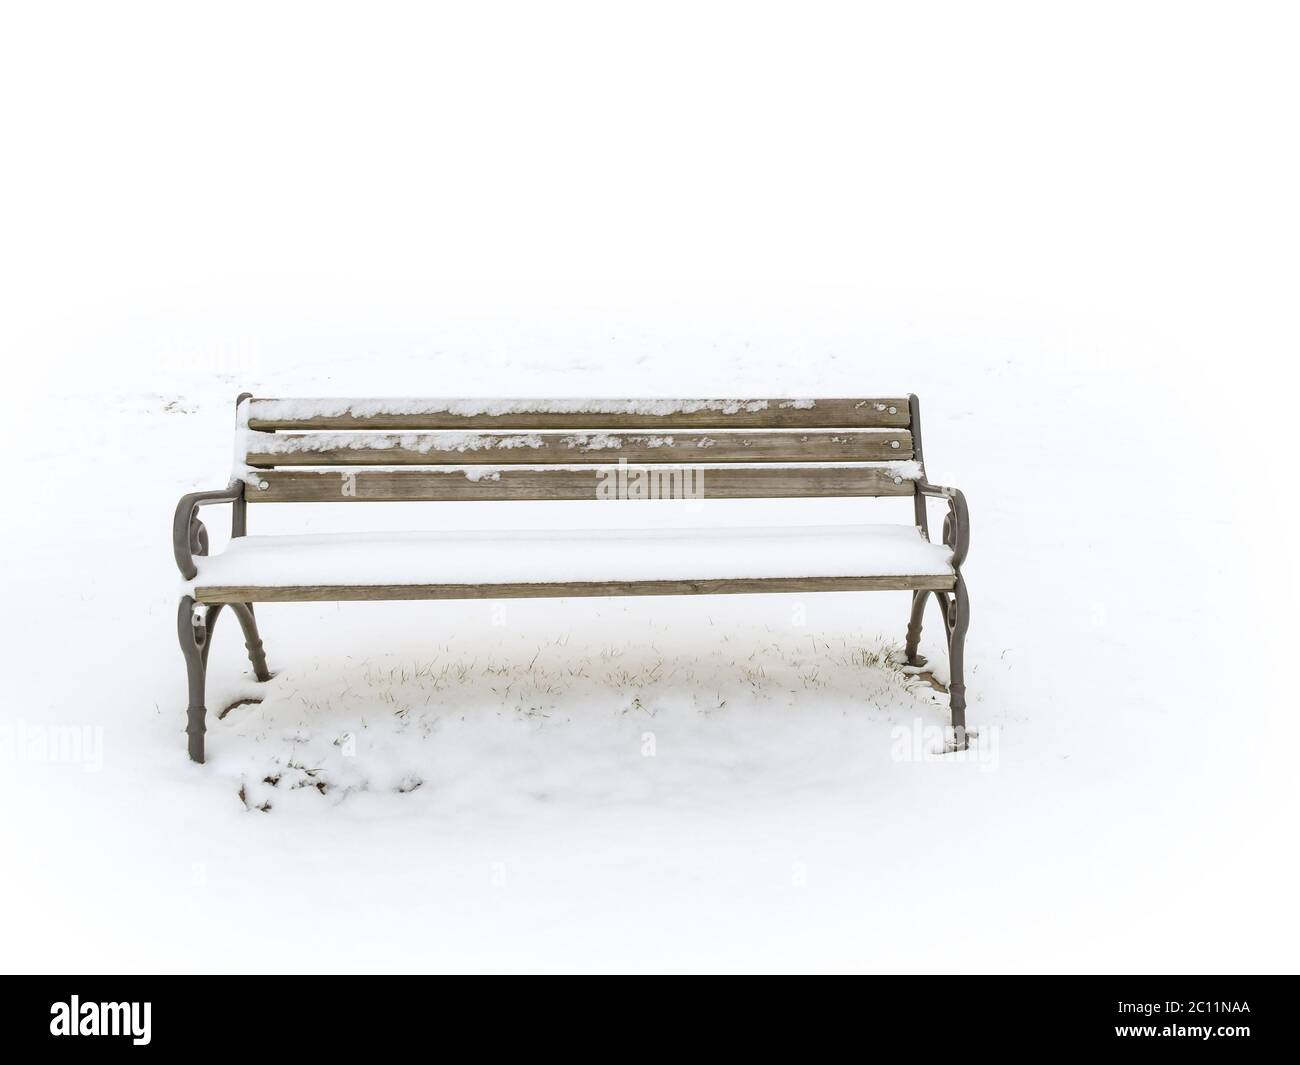 bench in a snowy winter senery Stock Photo